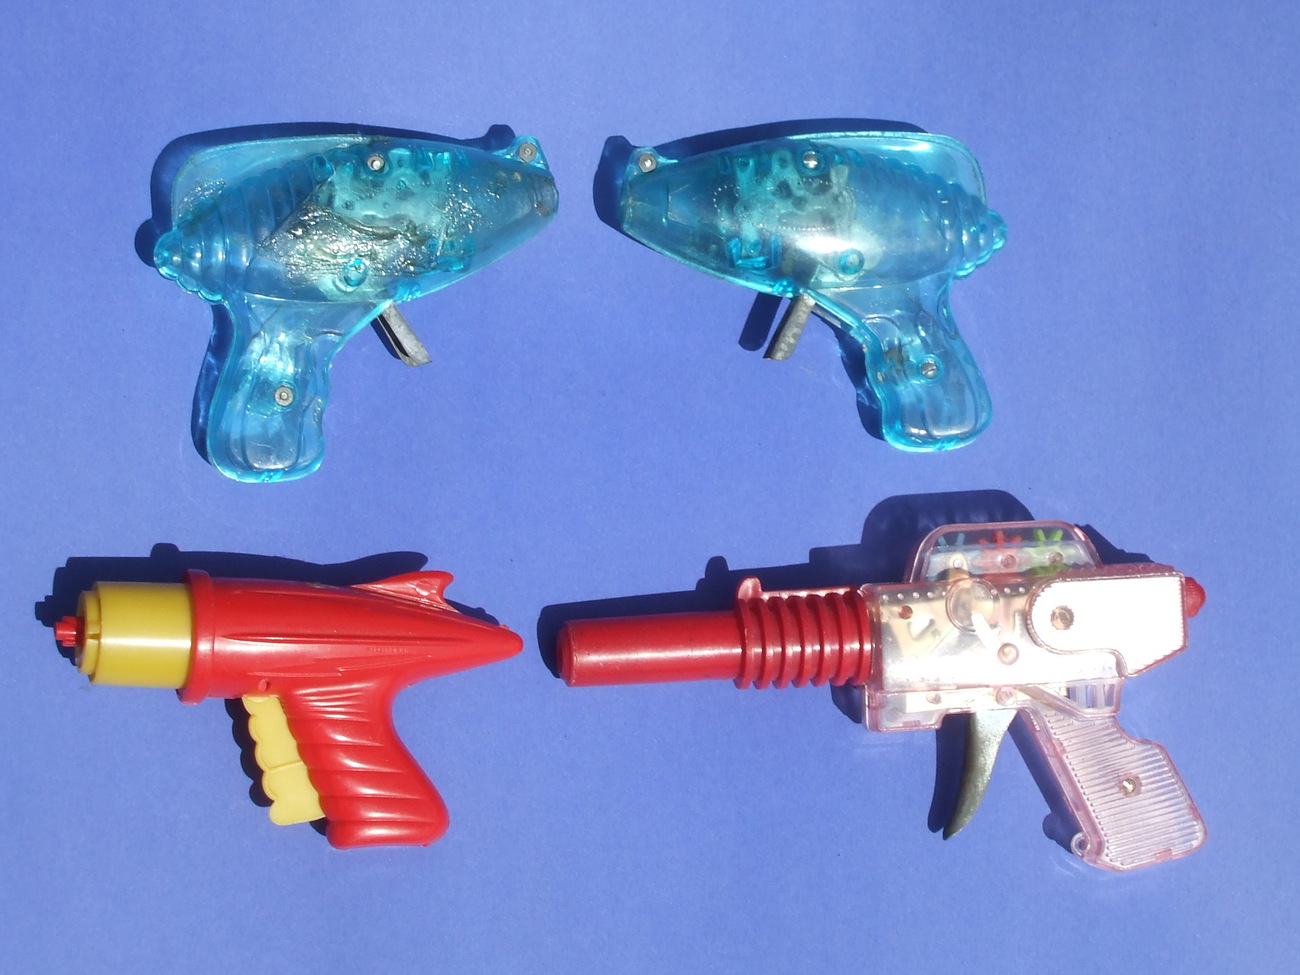 Spark Guns and 50 similar items